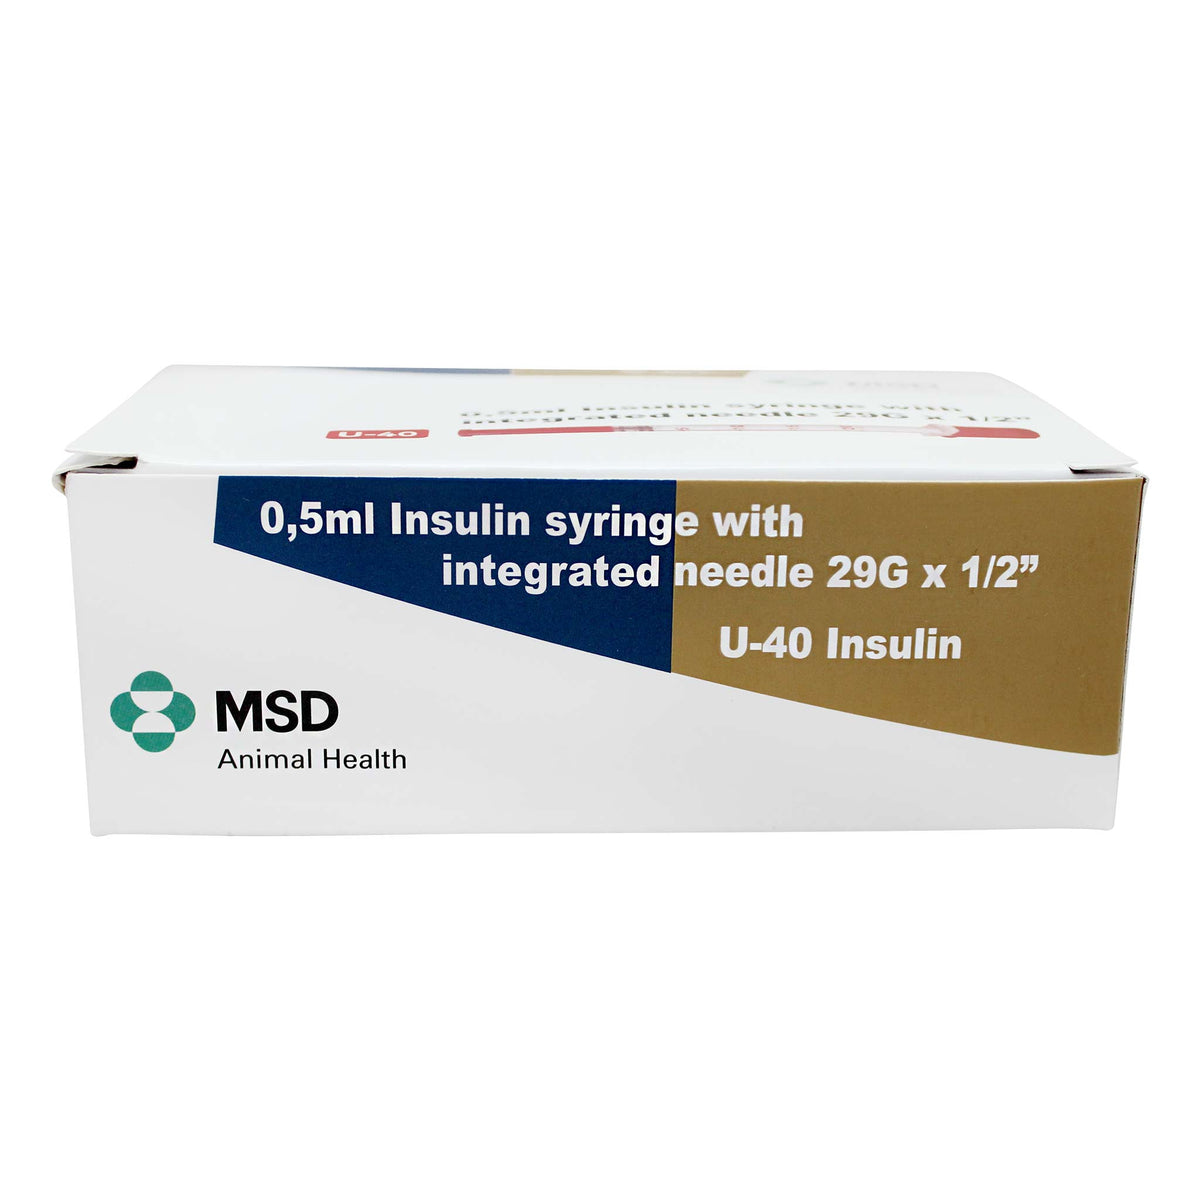 MSD Caninsulin Insulin Syringes - 0.5mL 40IU - Box of 30